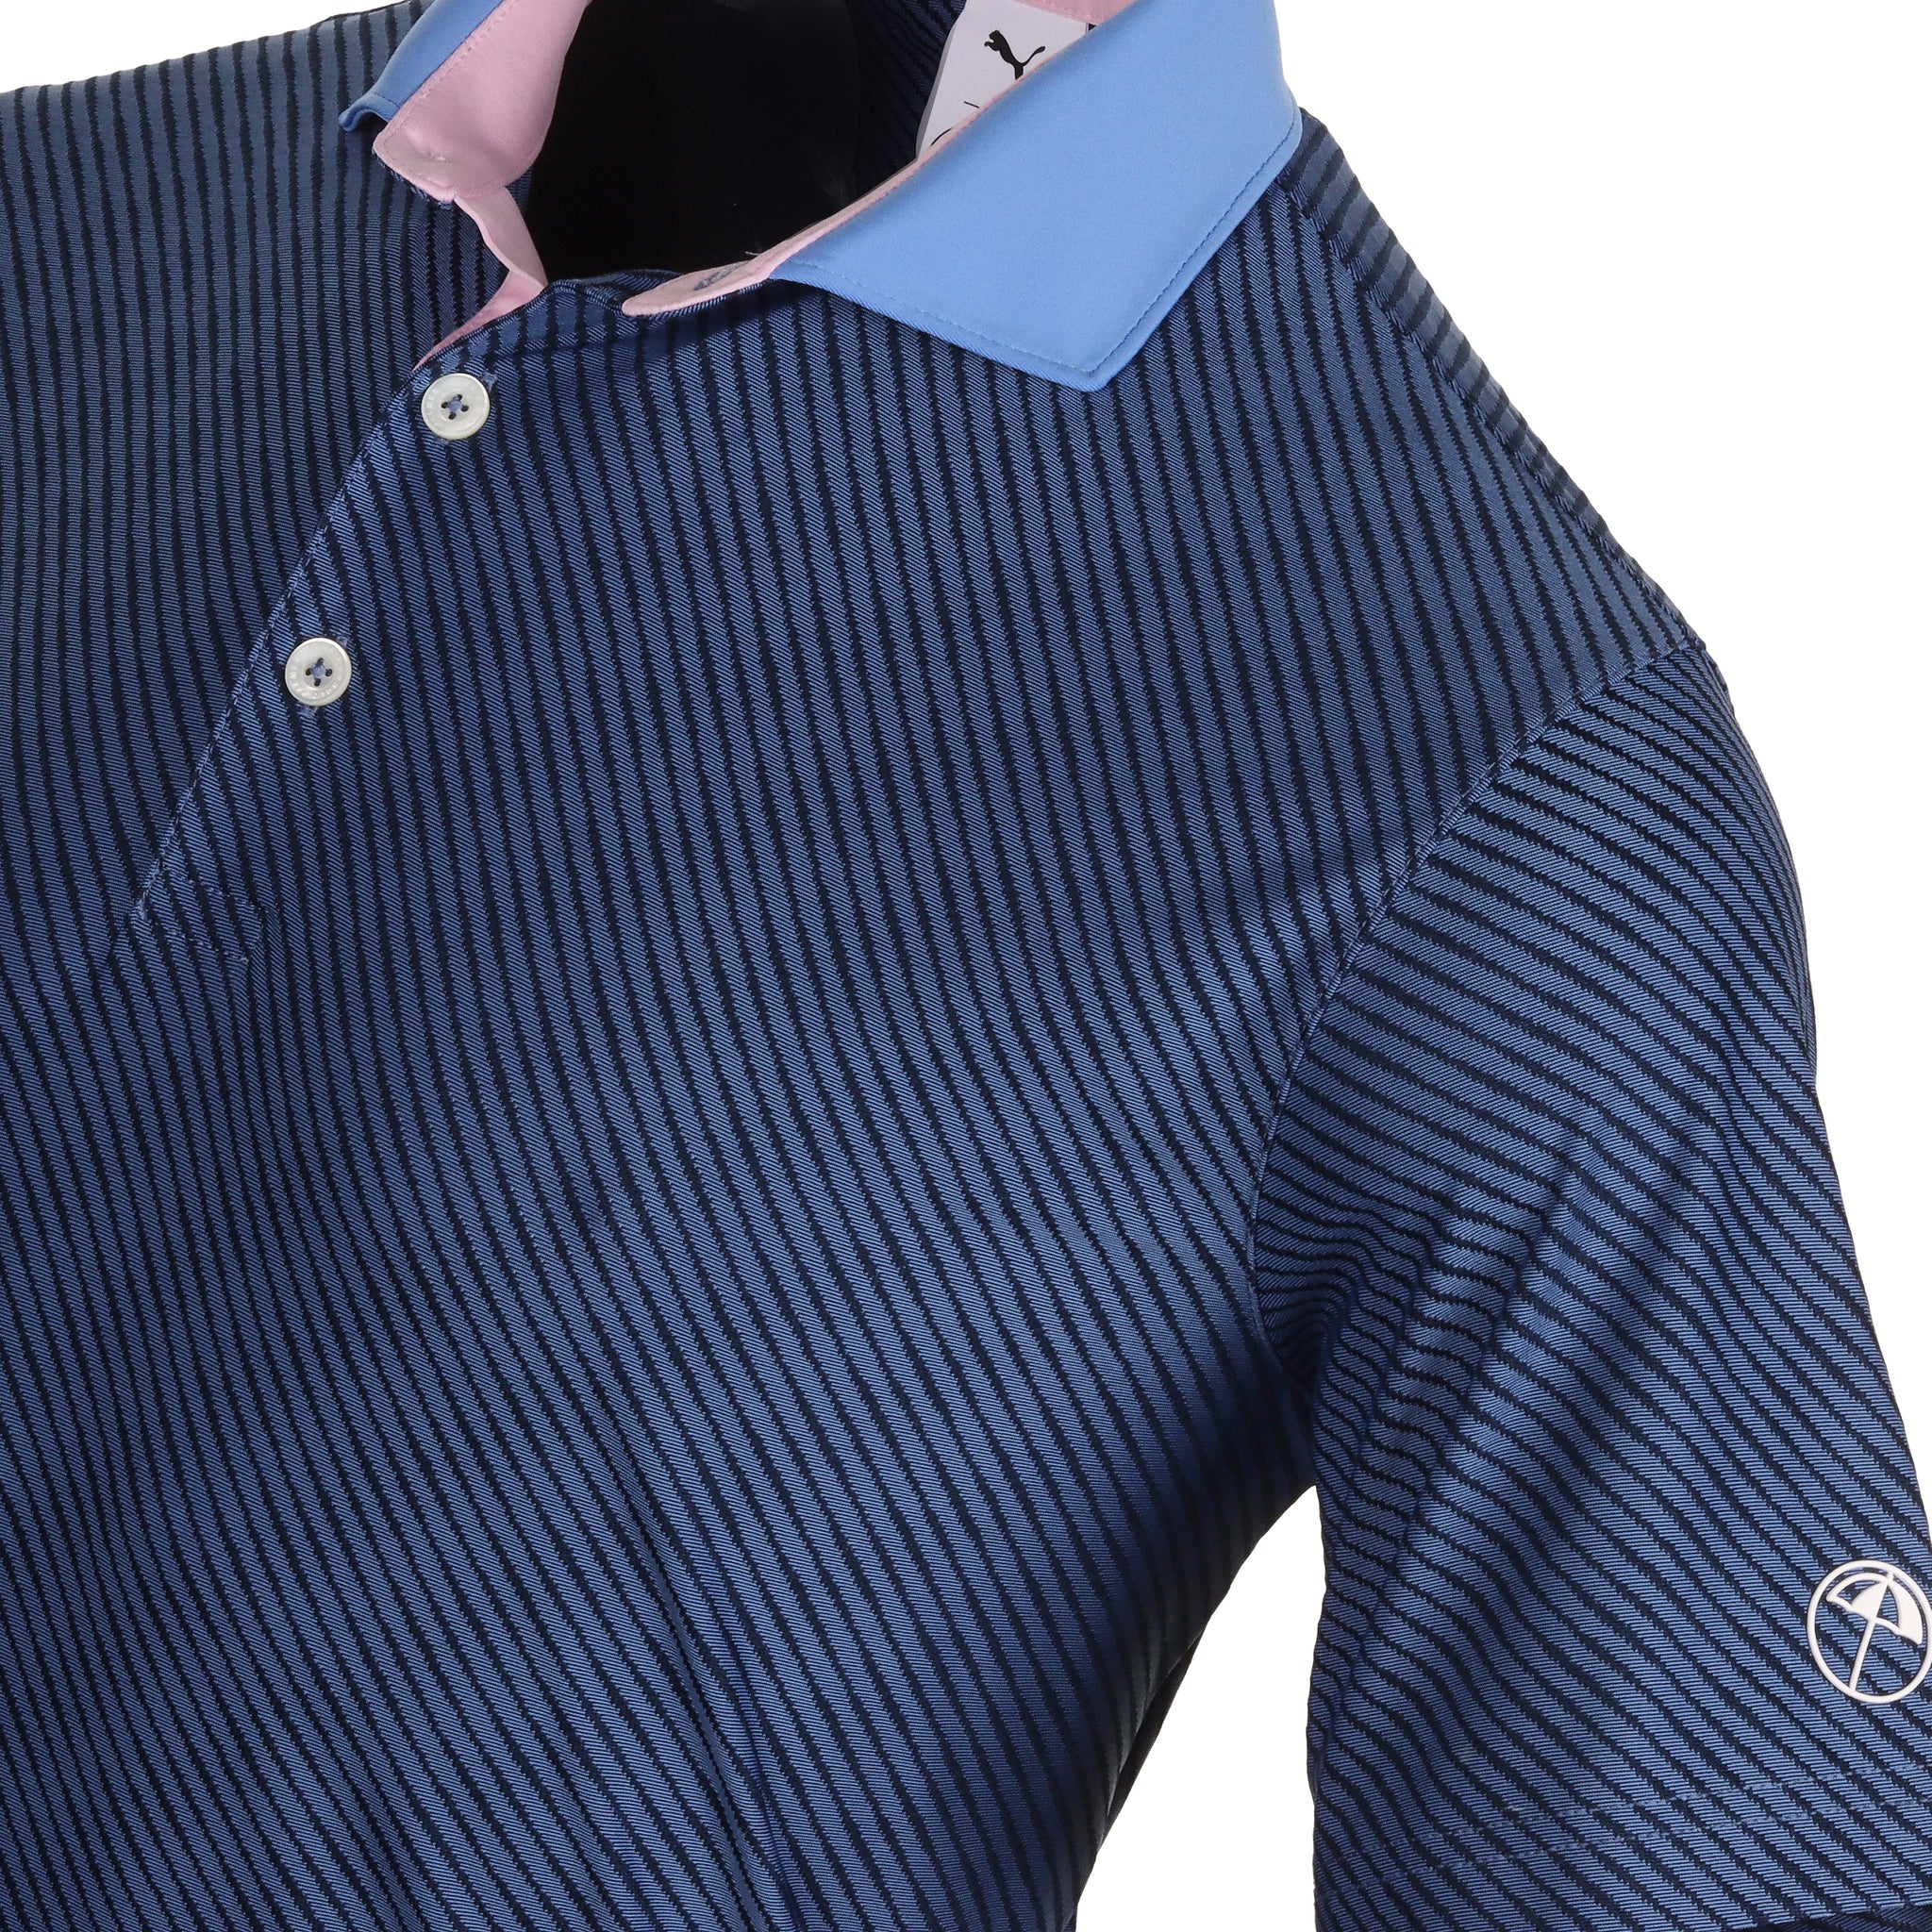 Puma Golf X Arnold Palmer Jacquard Stripe Shirt